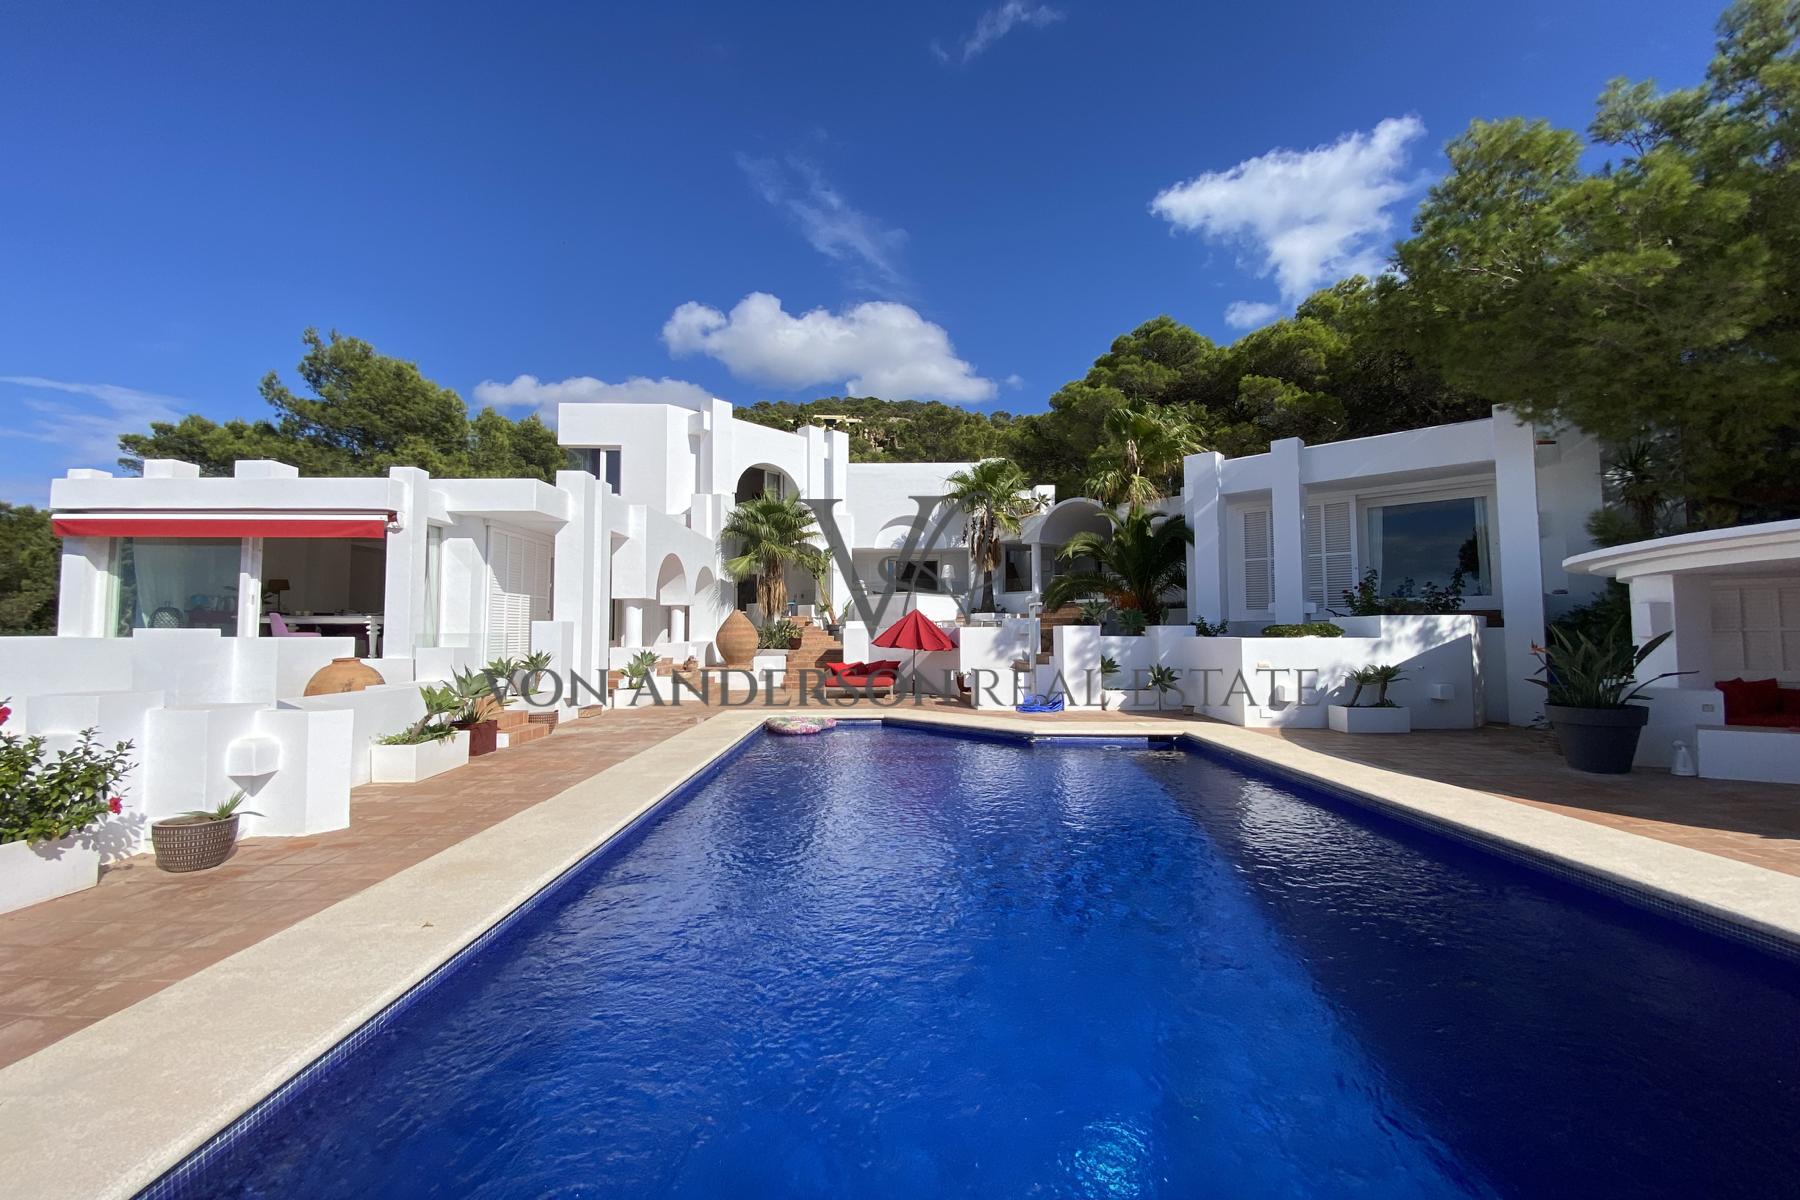 Uniquely Designed Villa with Stunning Sea & Sunset Views, ref. VA1007, for sale in Ibiza by Von Anderson Real Estate